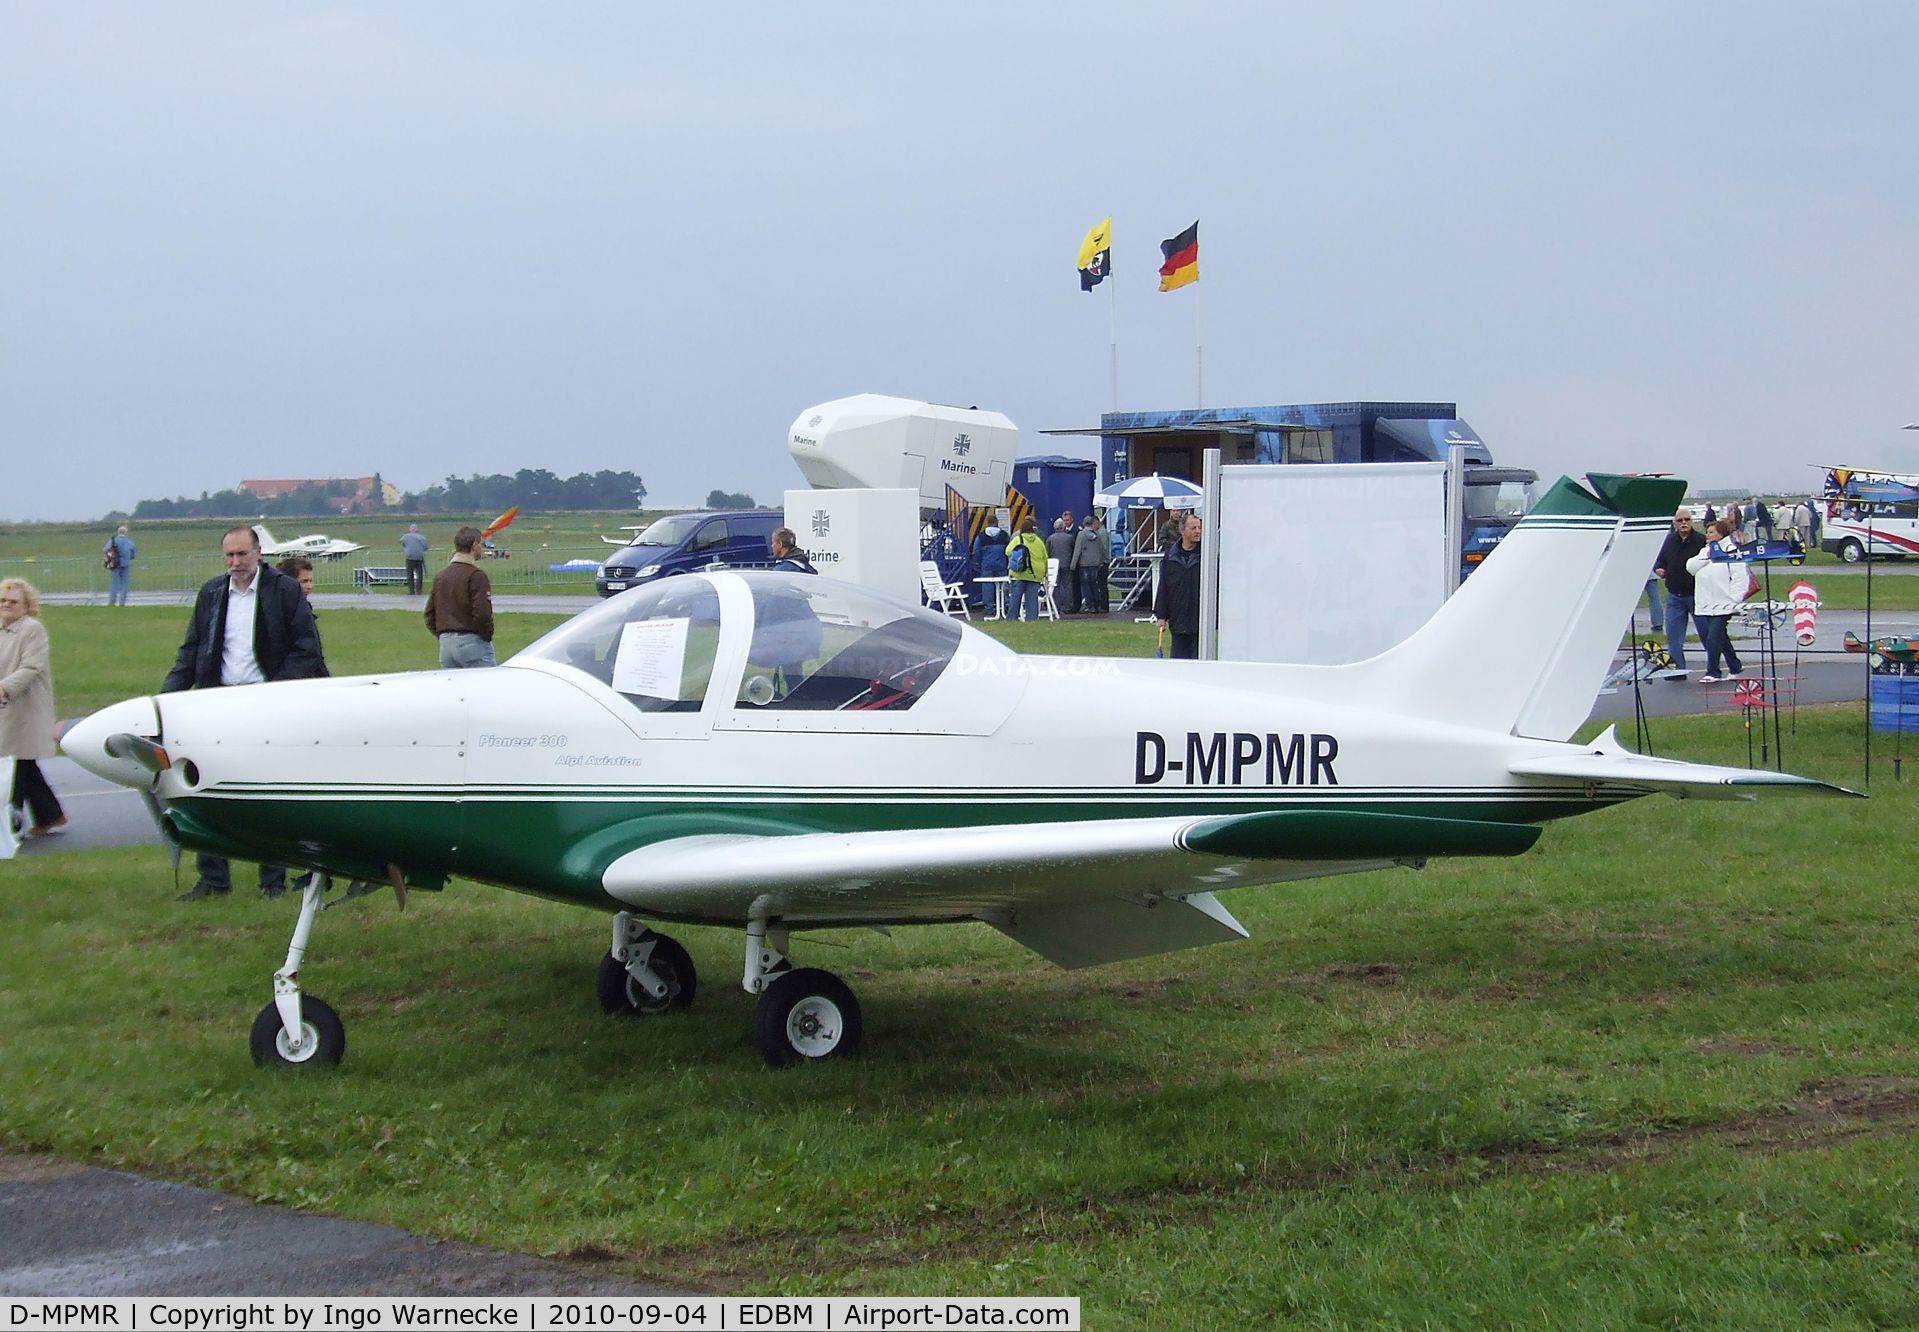 D-MPMR, 2000 Alpi Aviation Pioneer 300 C/N 118, Alpi Pioneer 300 at the 2010 Air Magdeburg